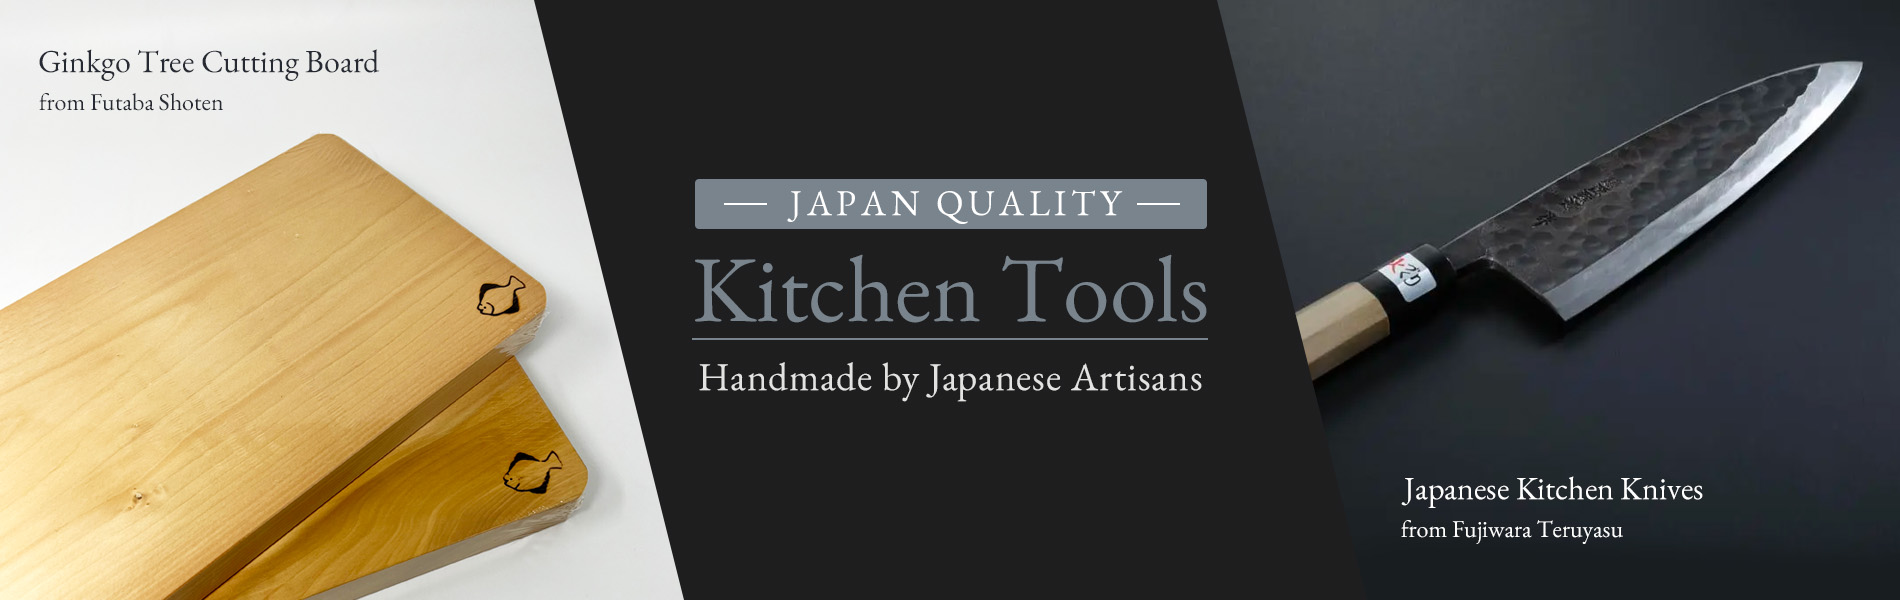 Japan Quality - Kitchen Tools